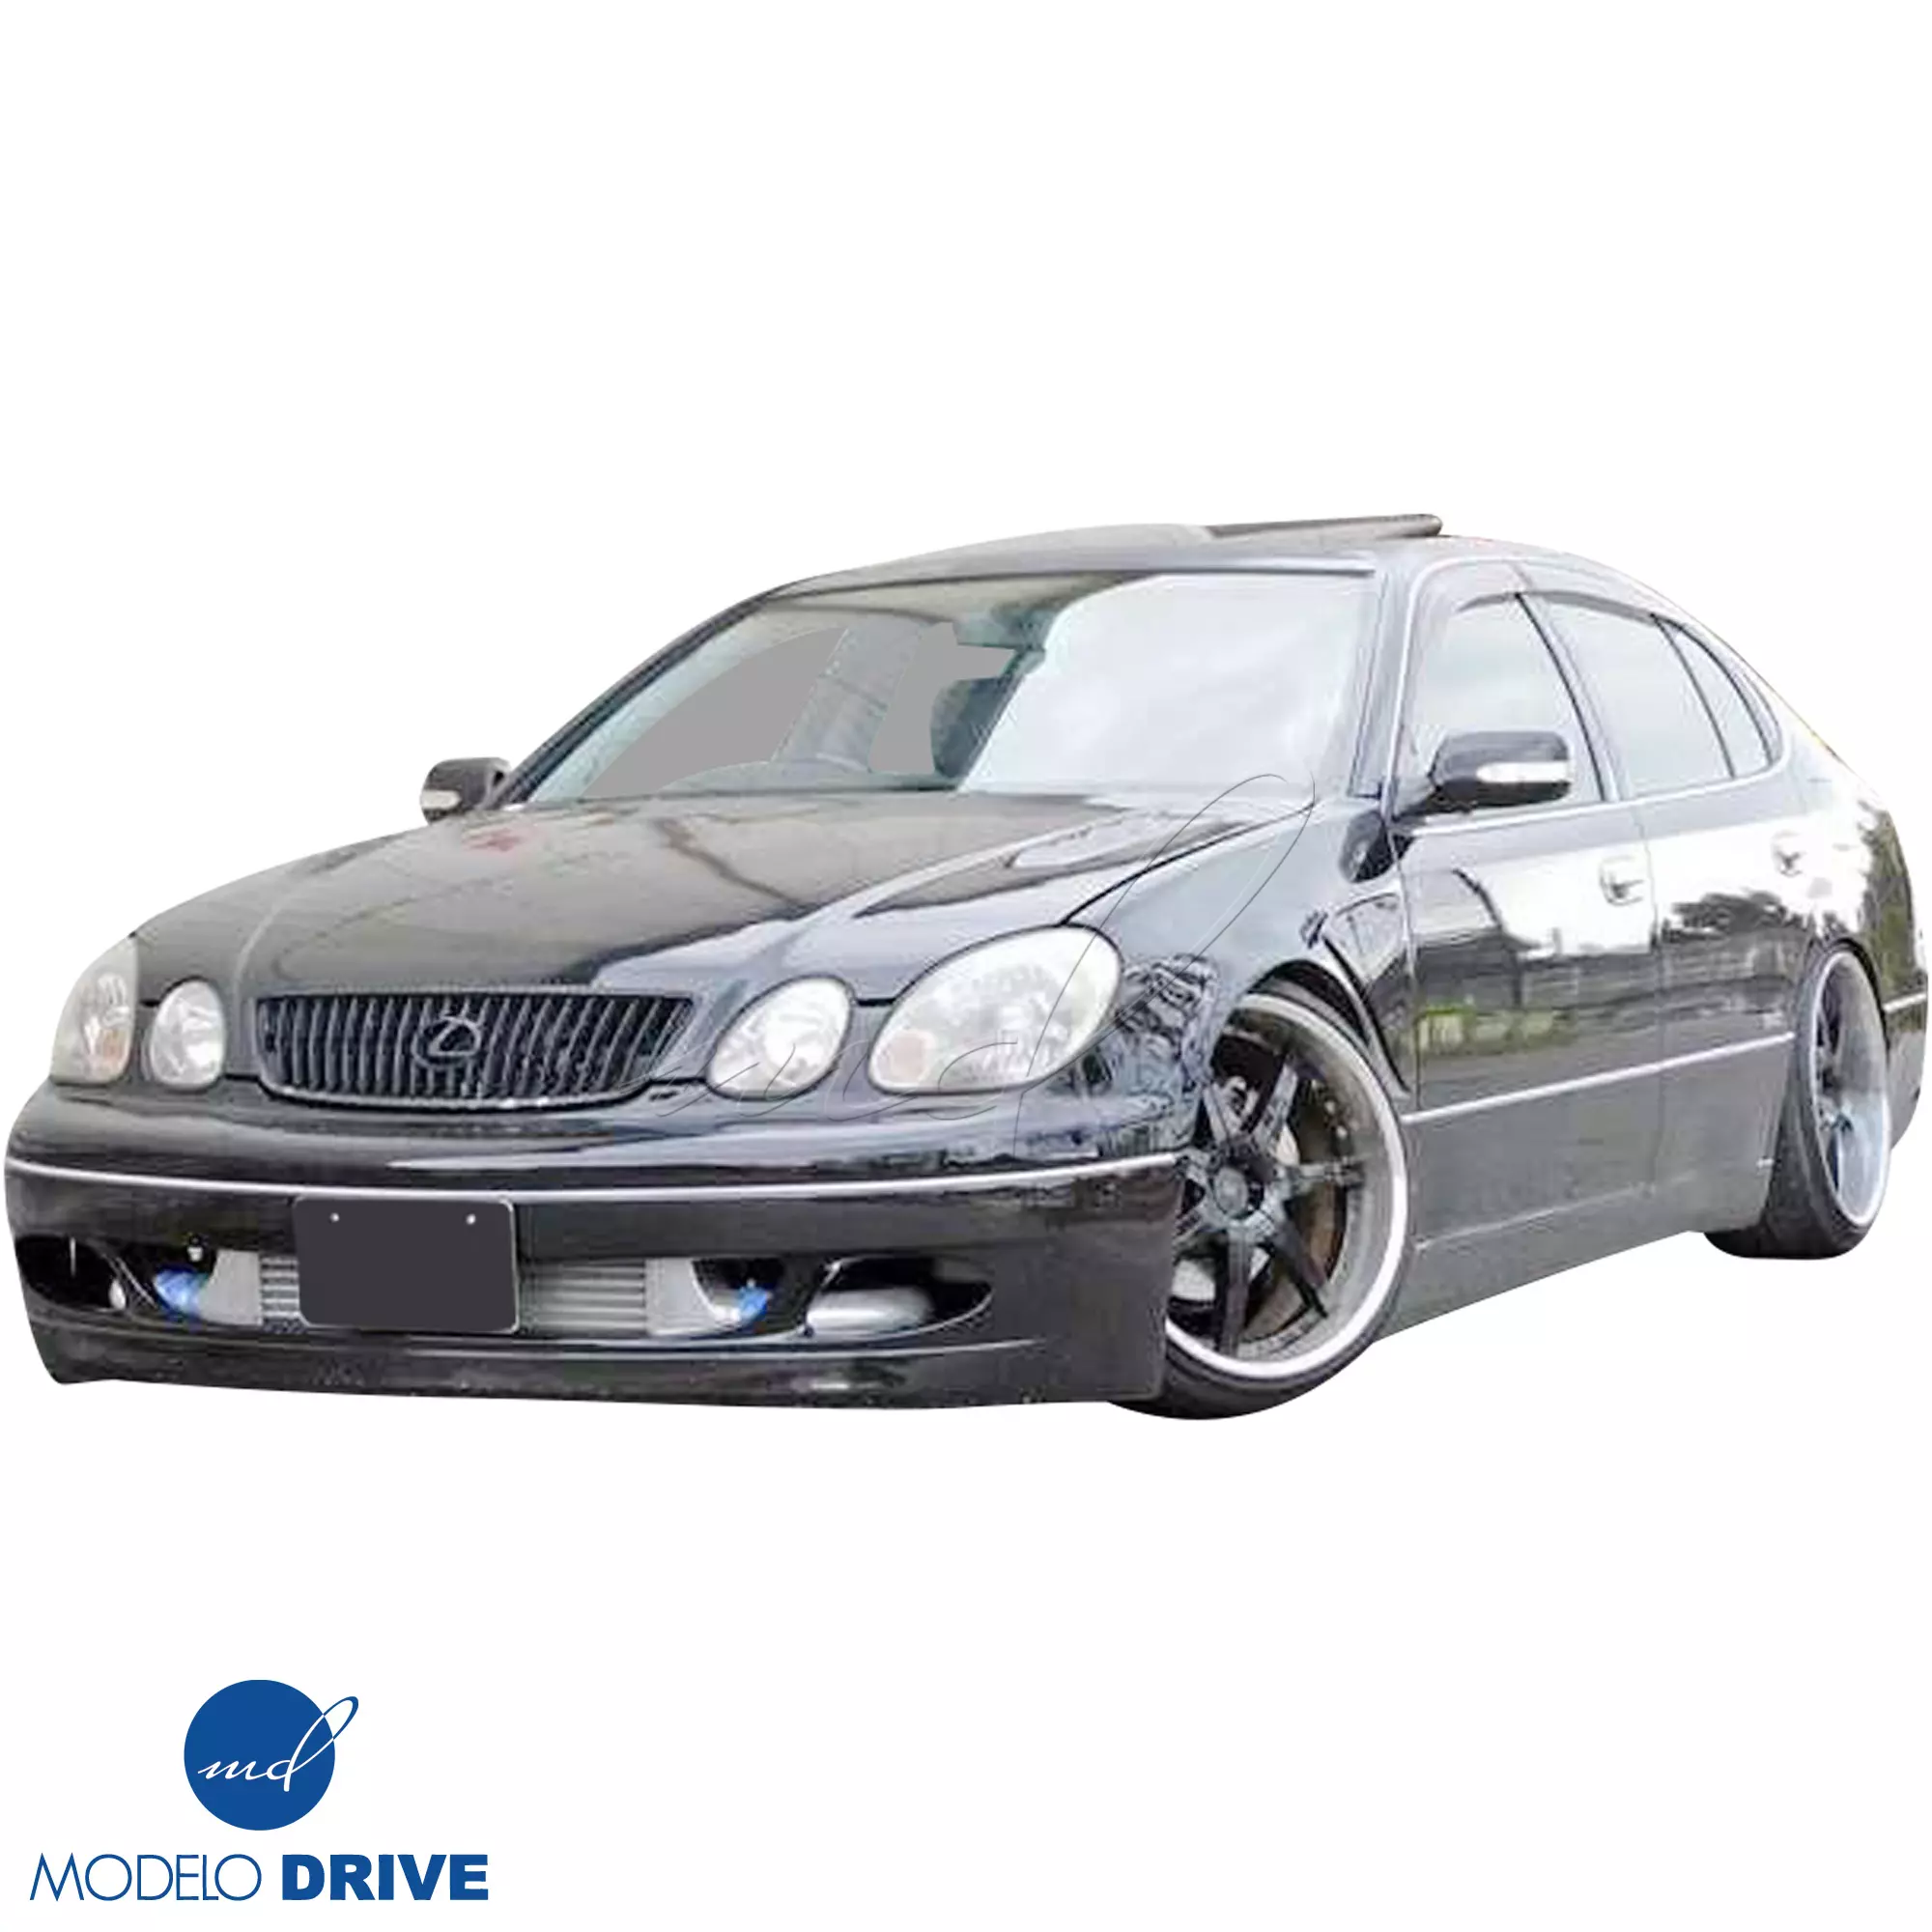 ModeloDrive FRP JUNT Body Kit 4pc > Lexus GS Series GS400 GS300 1998-2005 - Image 57